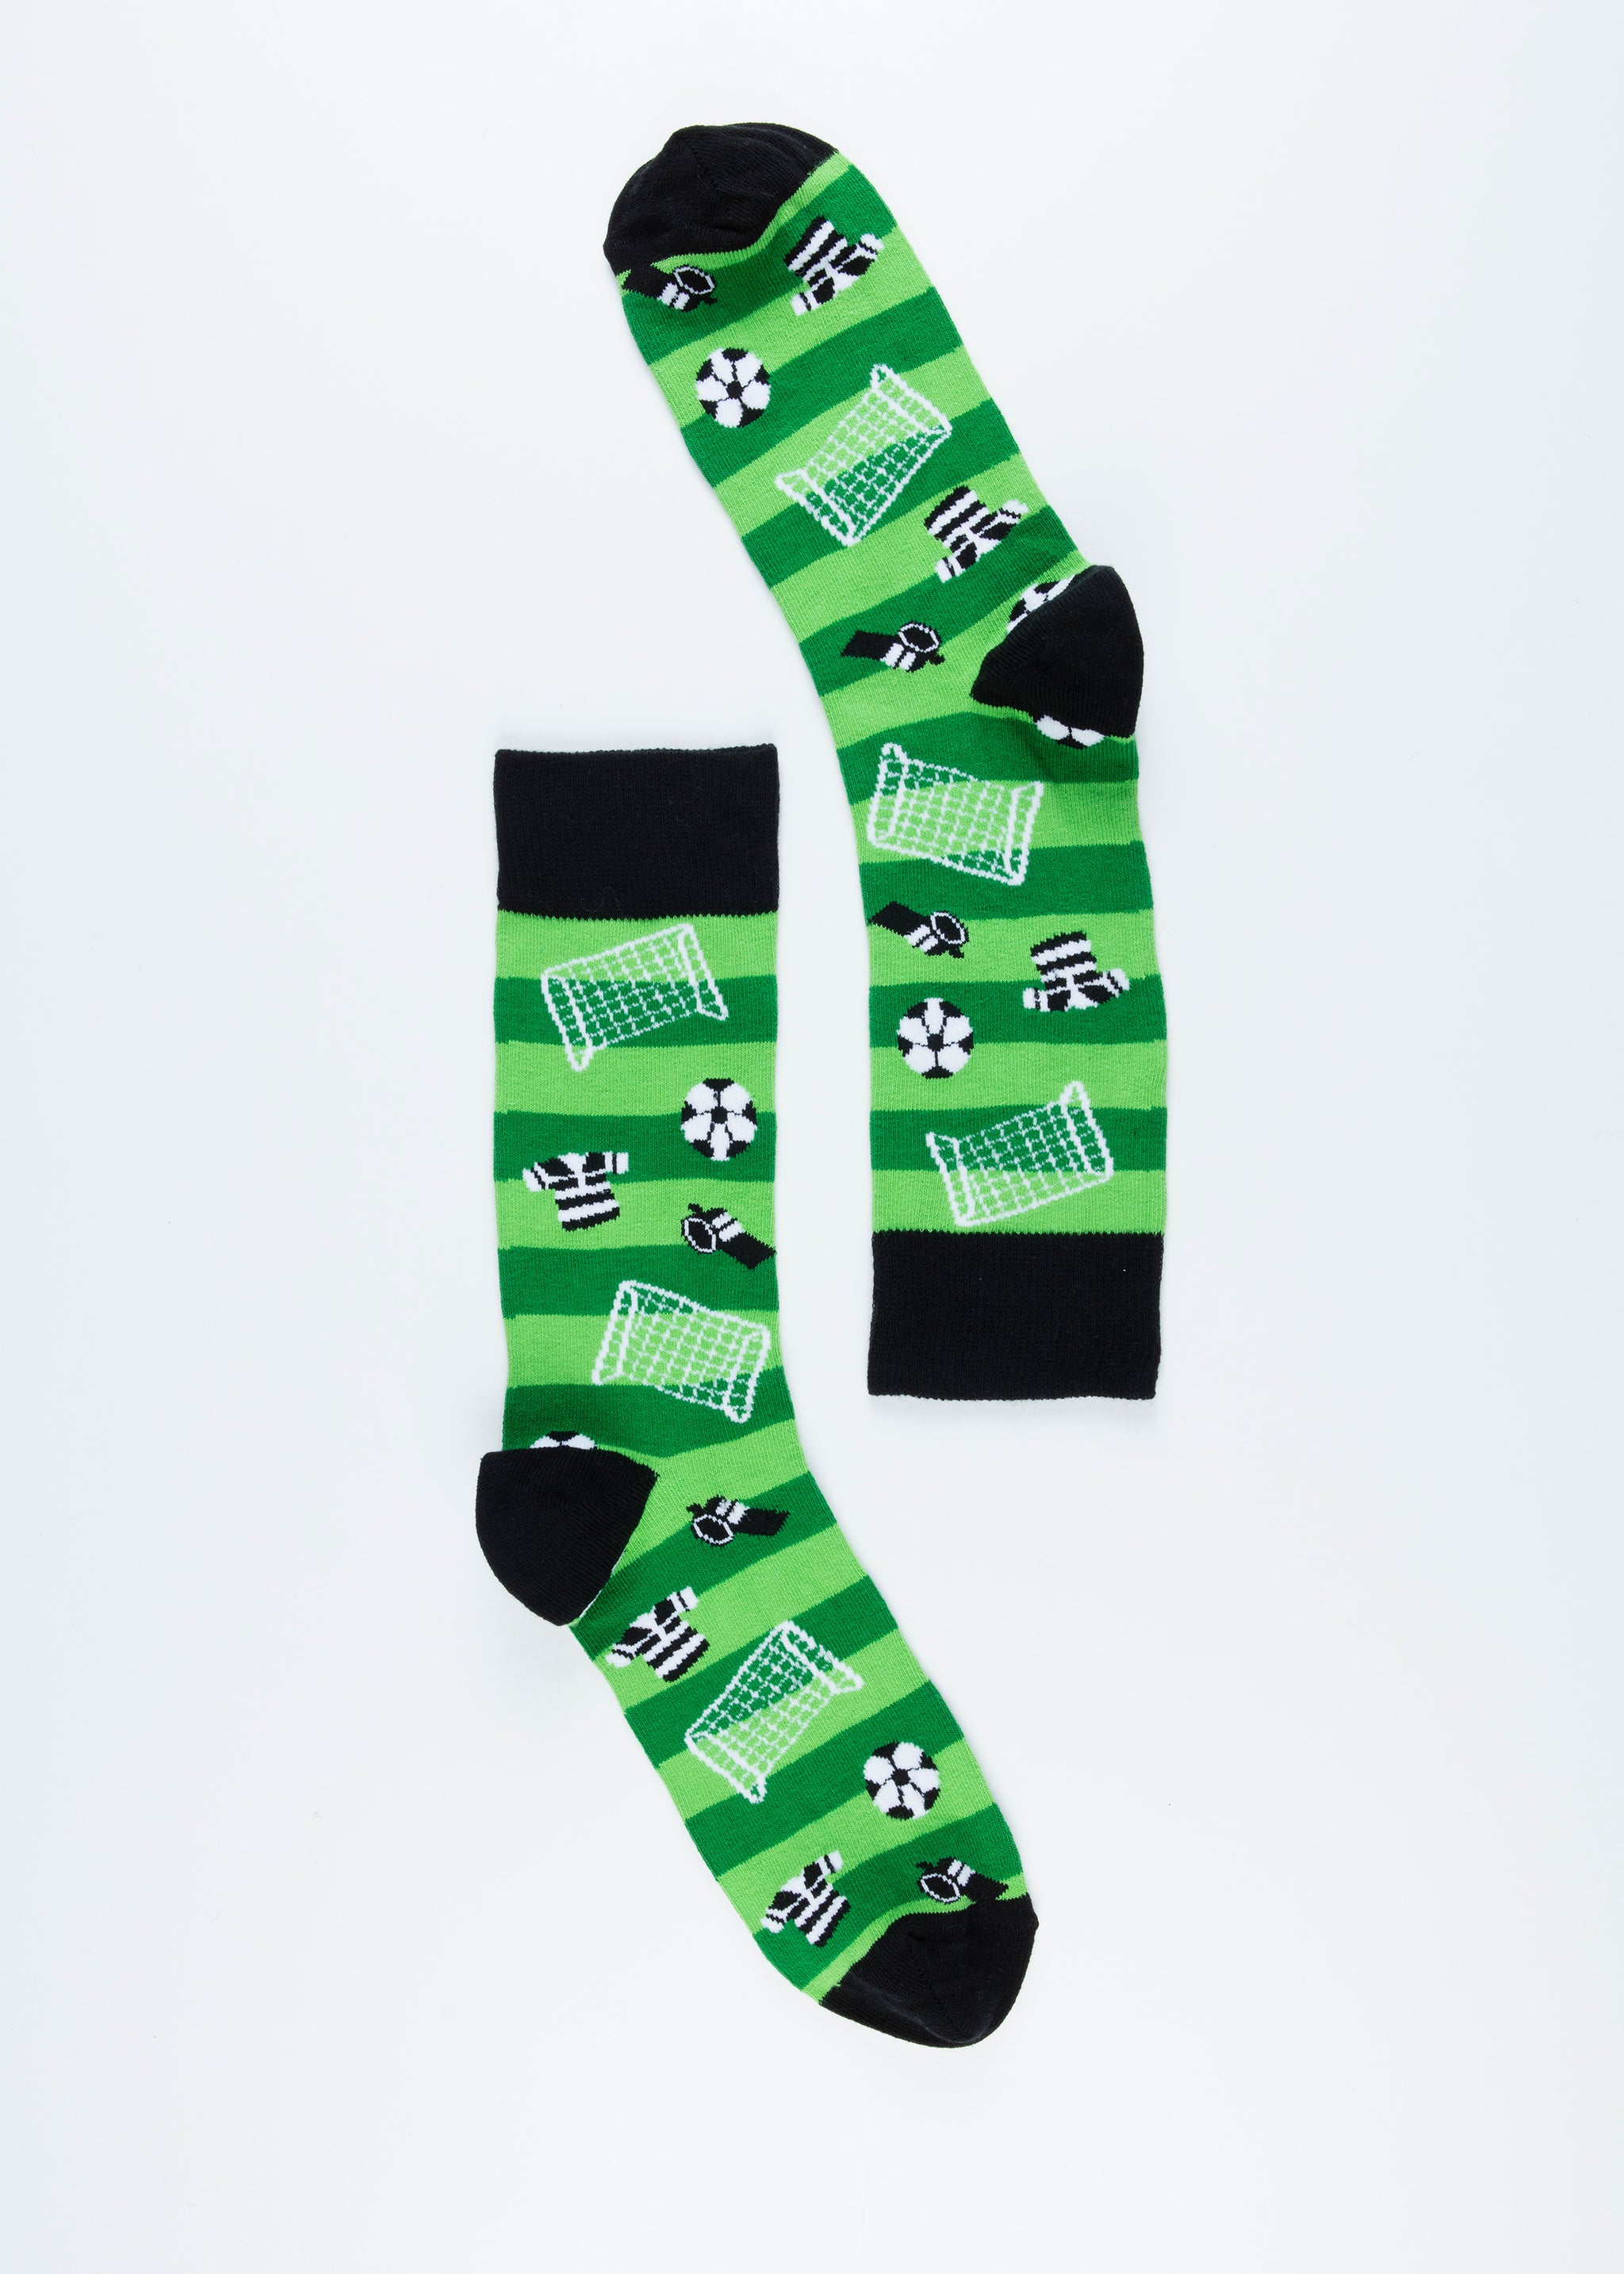 Men's Soccer Socks